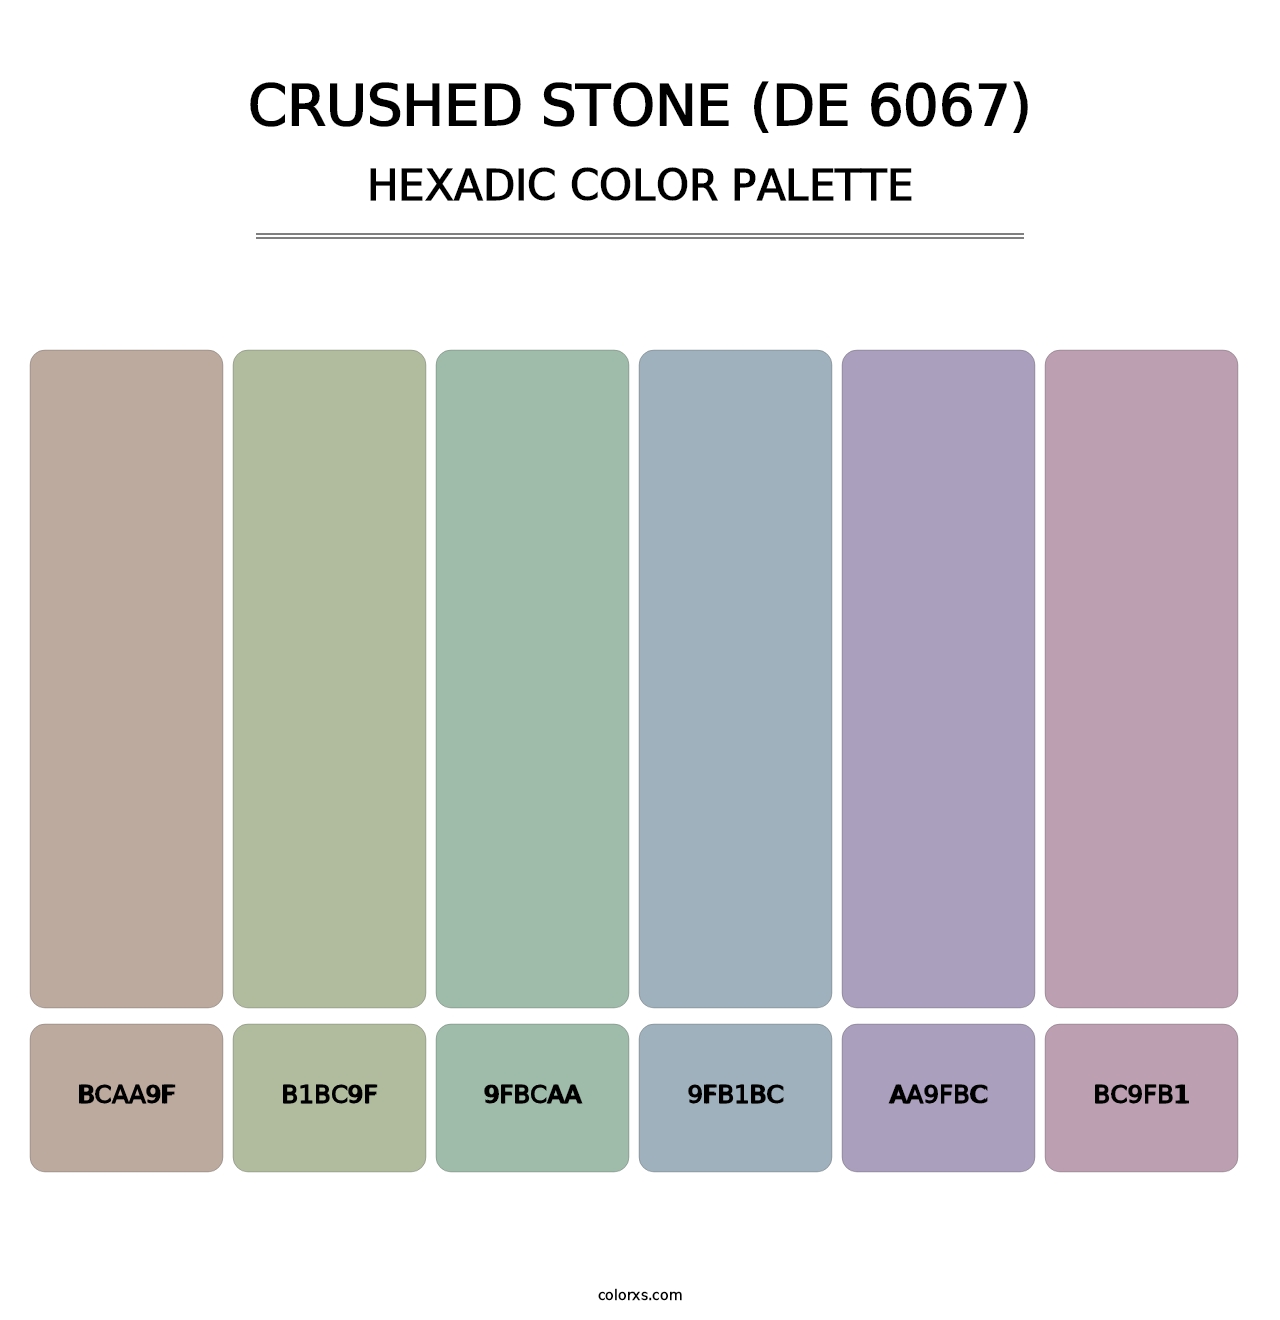 Crushed Stone (DE 6067) - Hexadic Color Palette